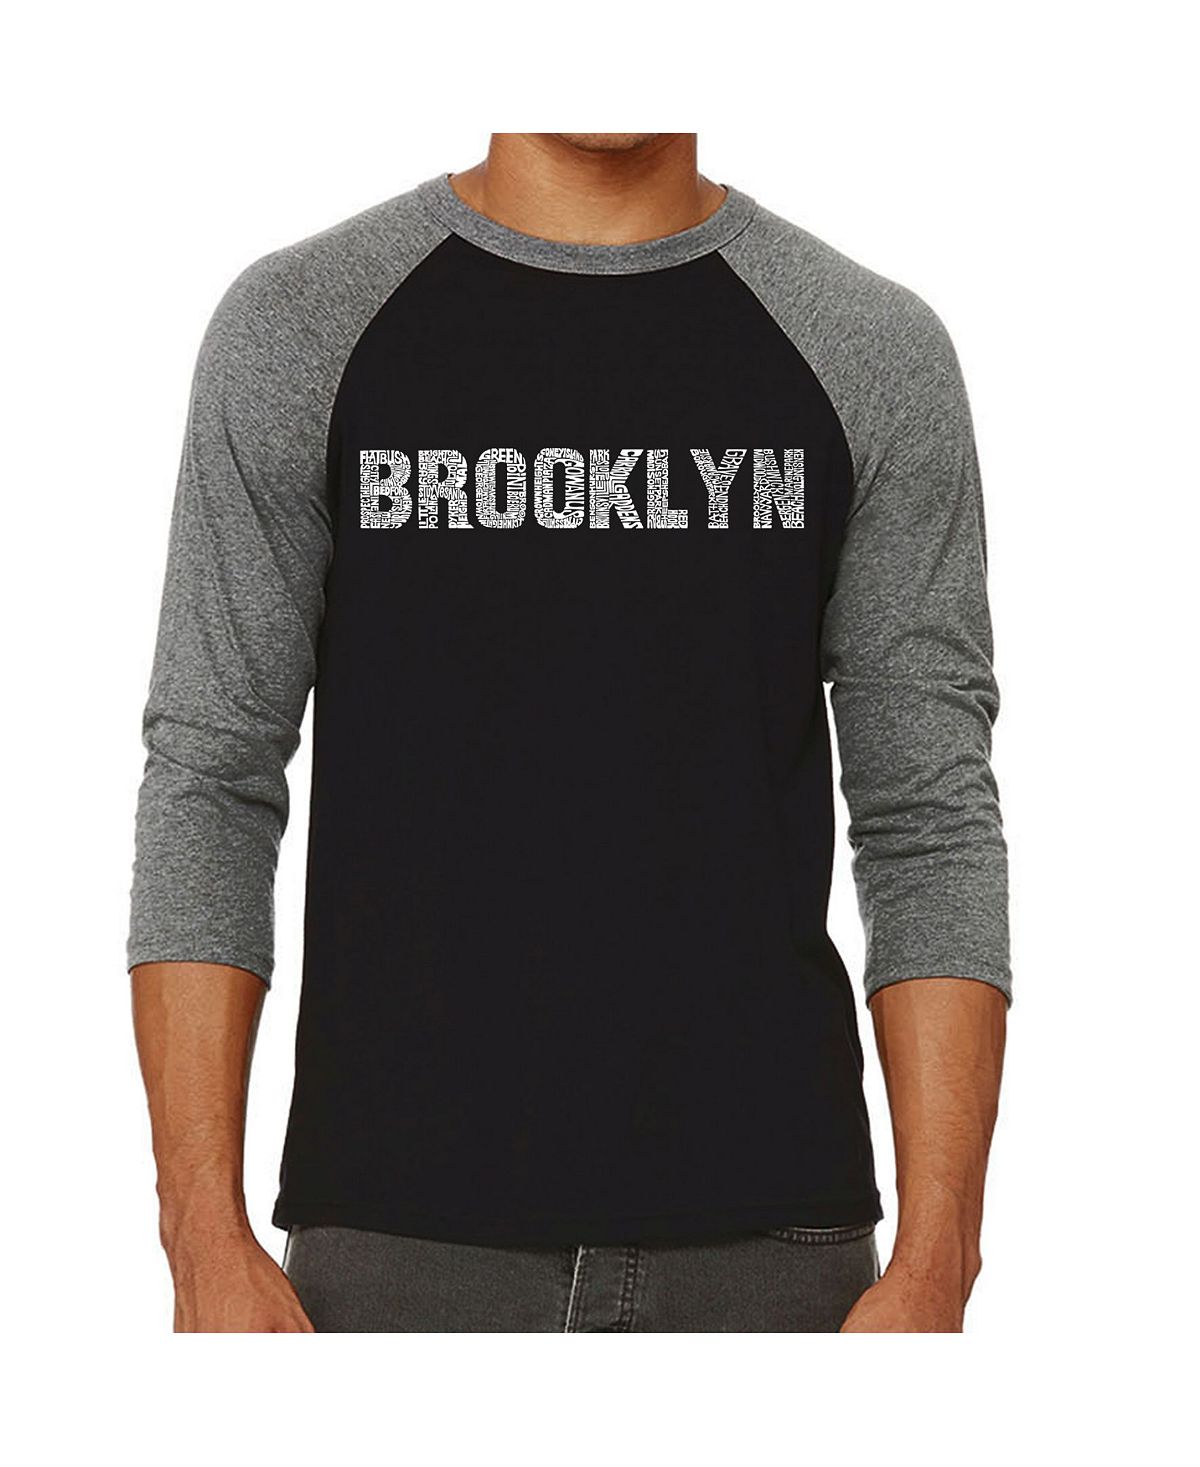 Мужская футболка реглан с надписью brooklyn neighborhoods LA Pop Art, серый мужская футболка с надписью reglan и надписью neighborhoods in new york city la pop art черный